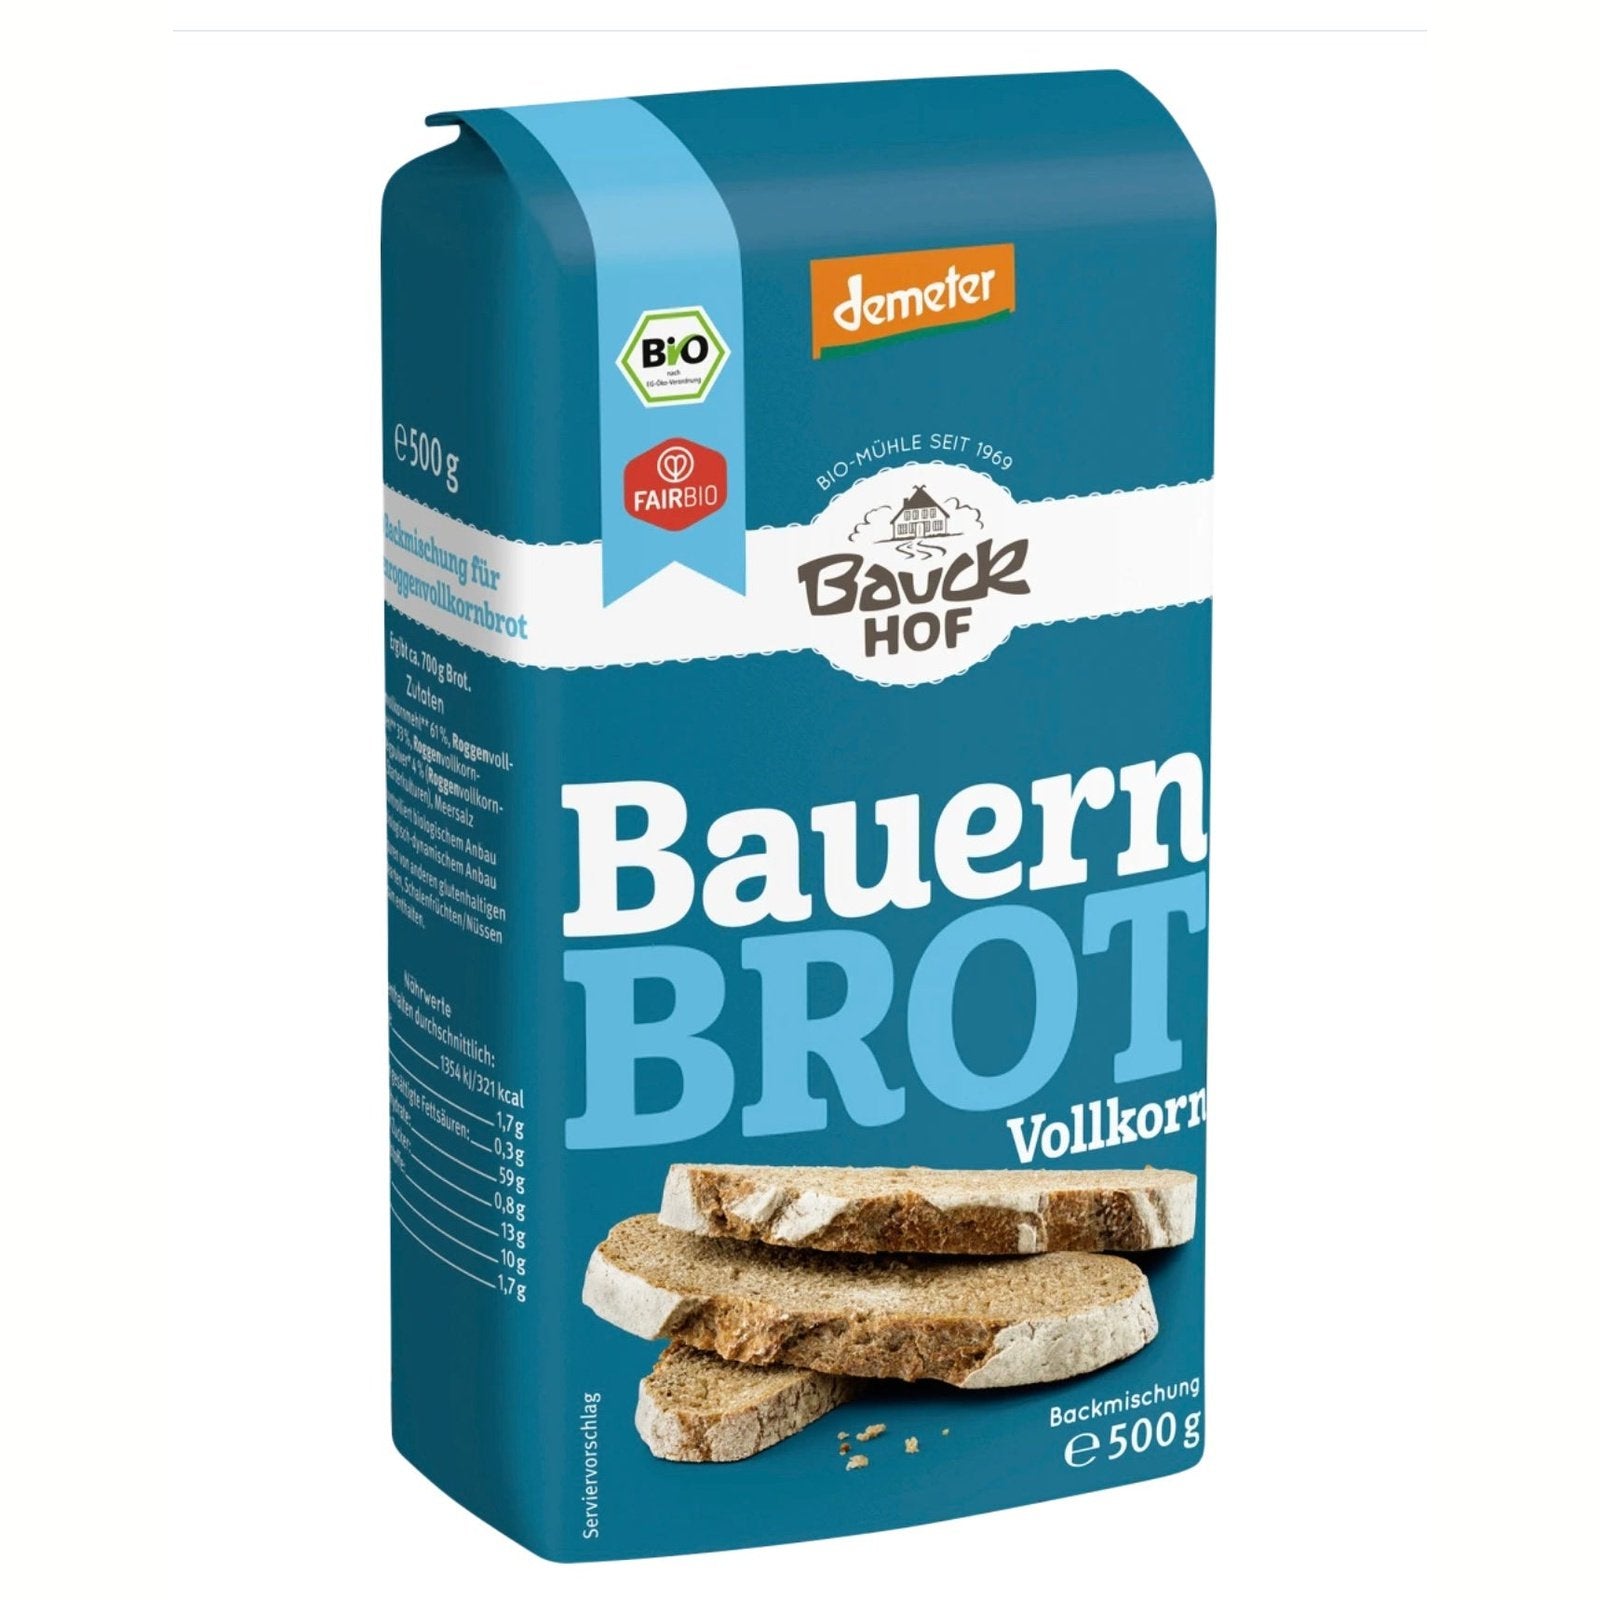 bio organic bread baking mix in blue packaging